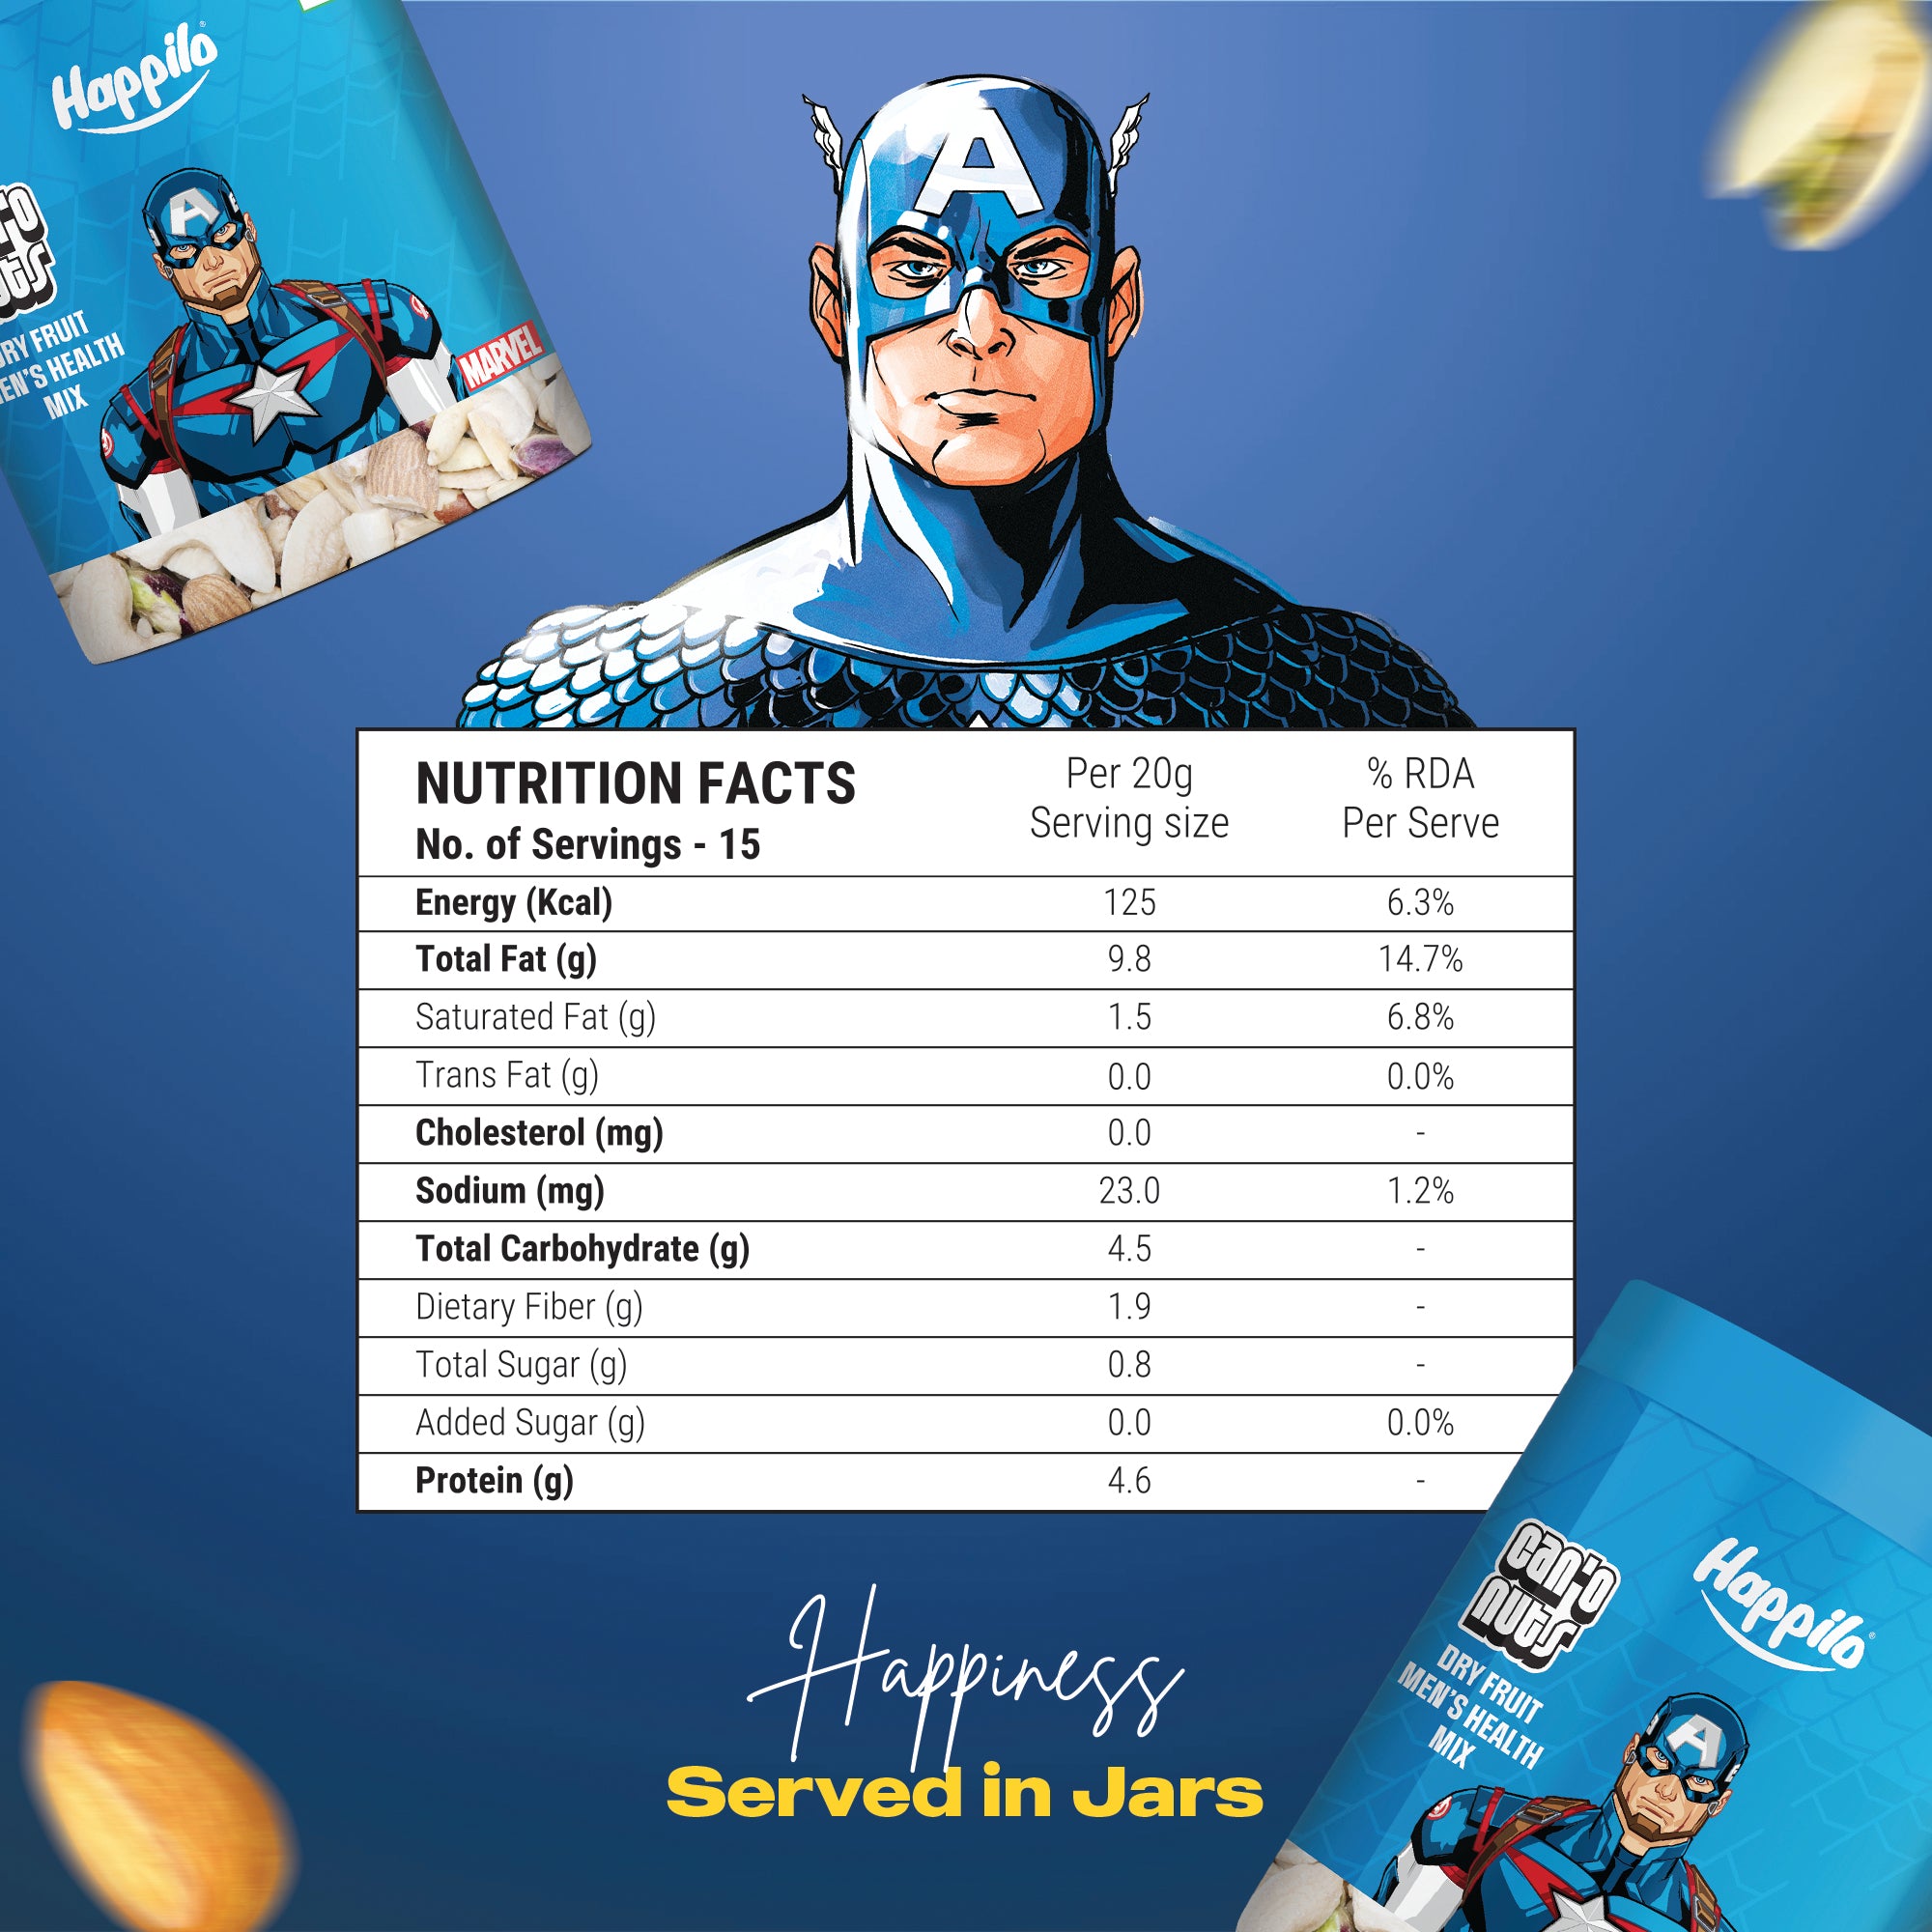 Captain America Edition Men's Health Dry Fruit Mix 300g